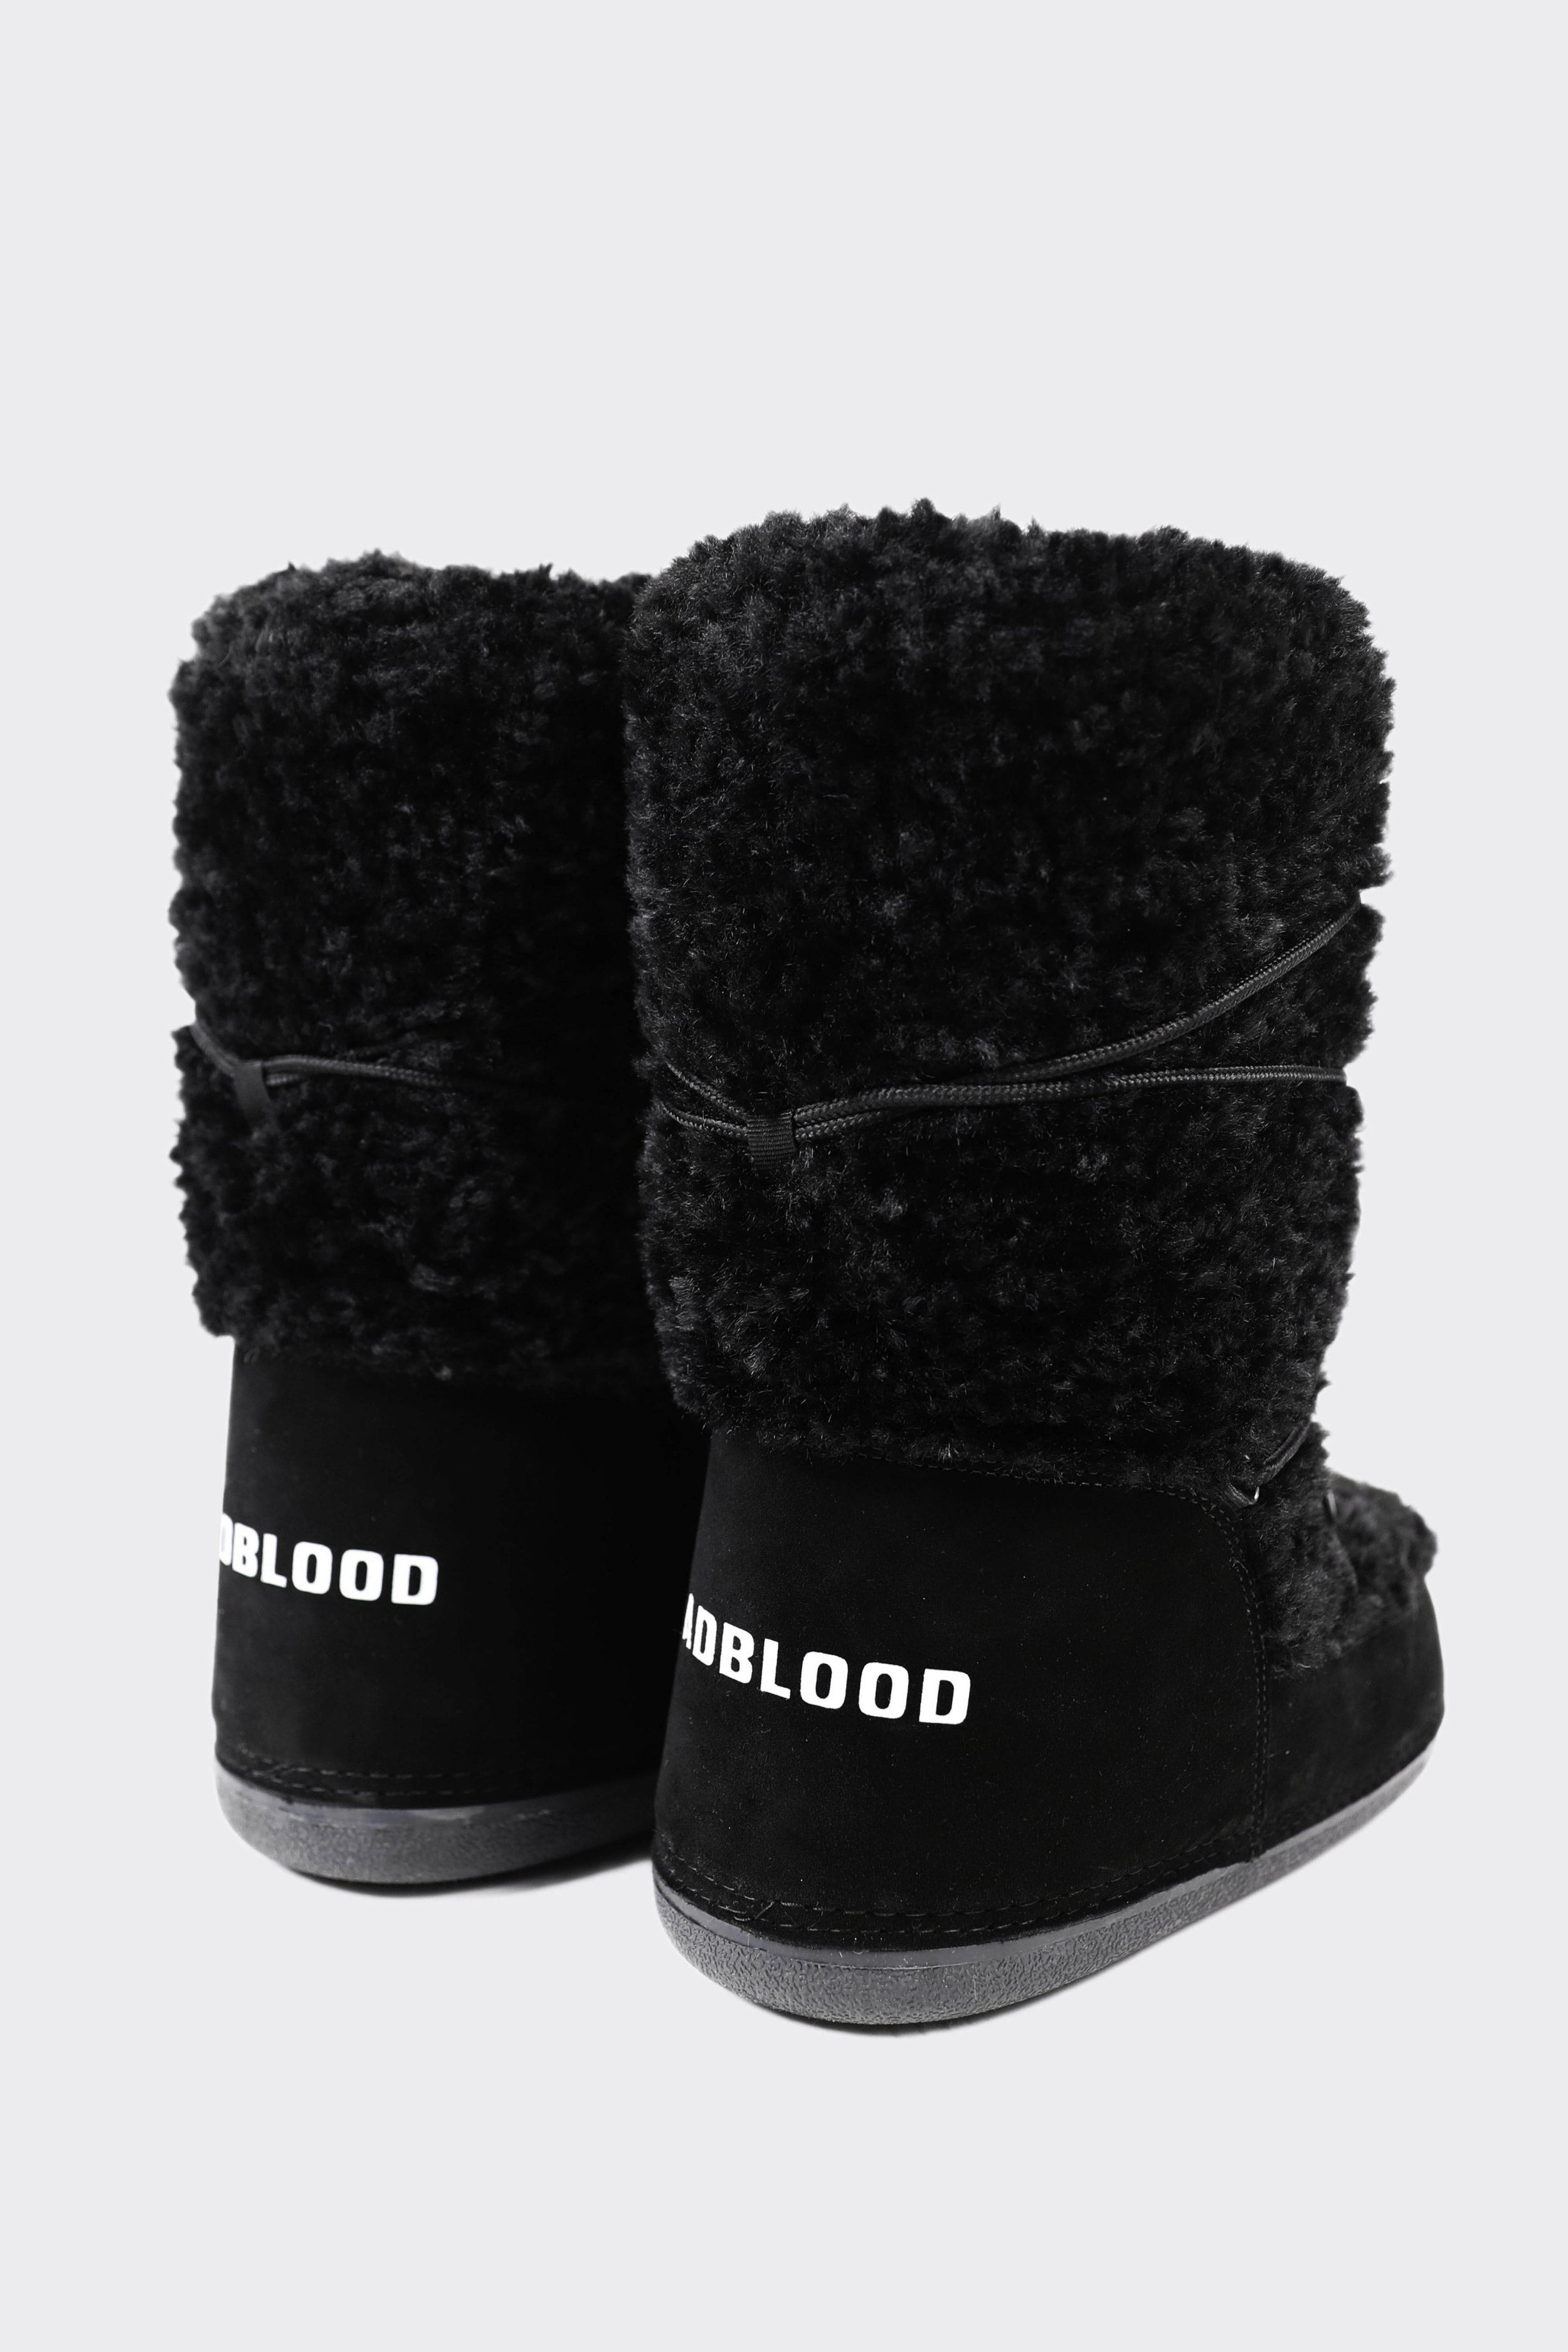 Badblood Shepherd Boots Tall Black